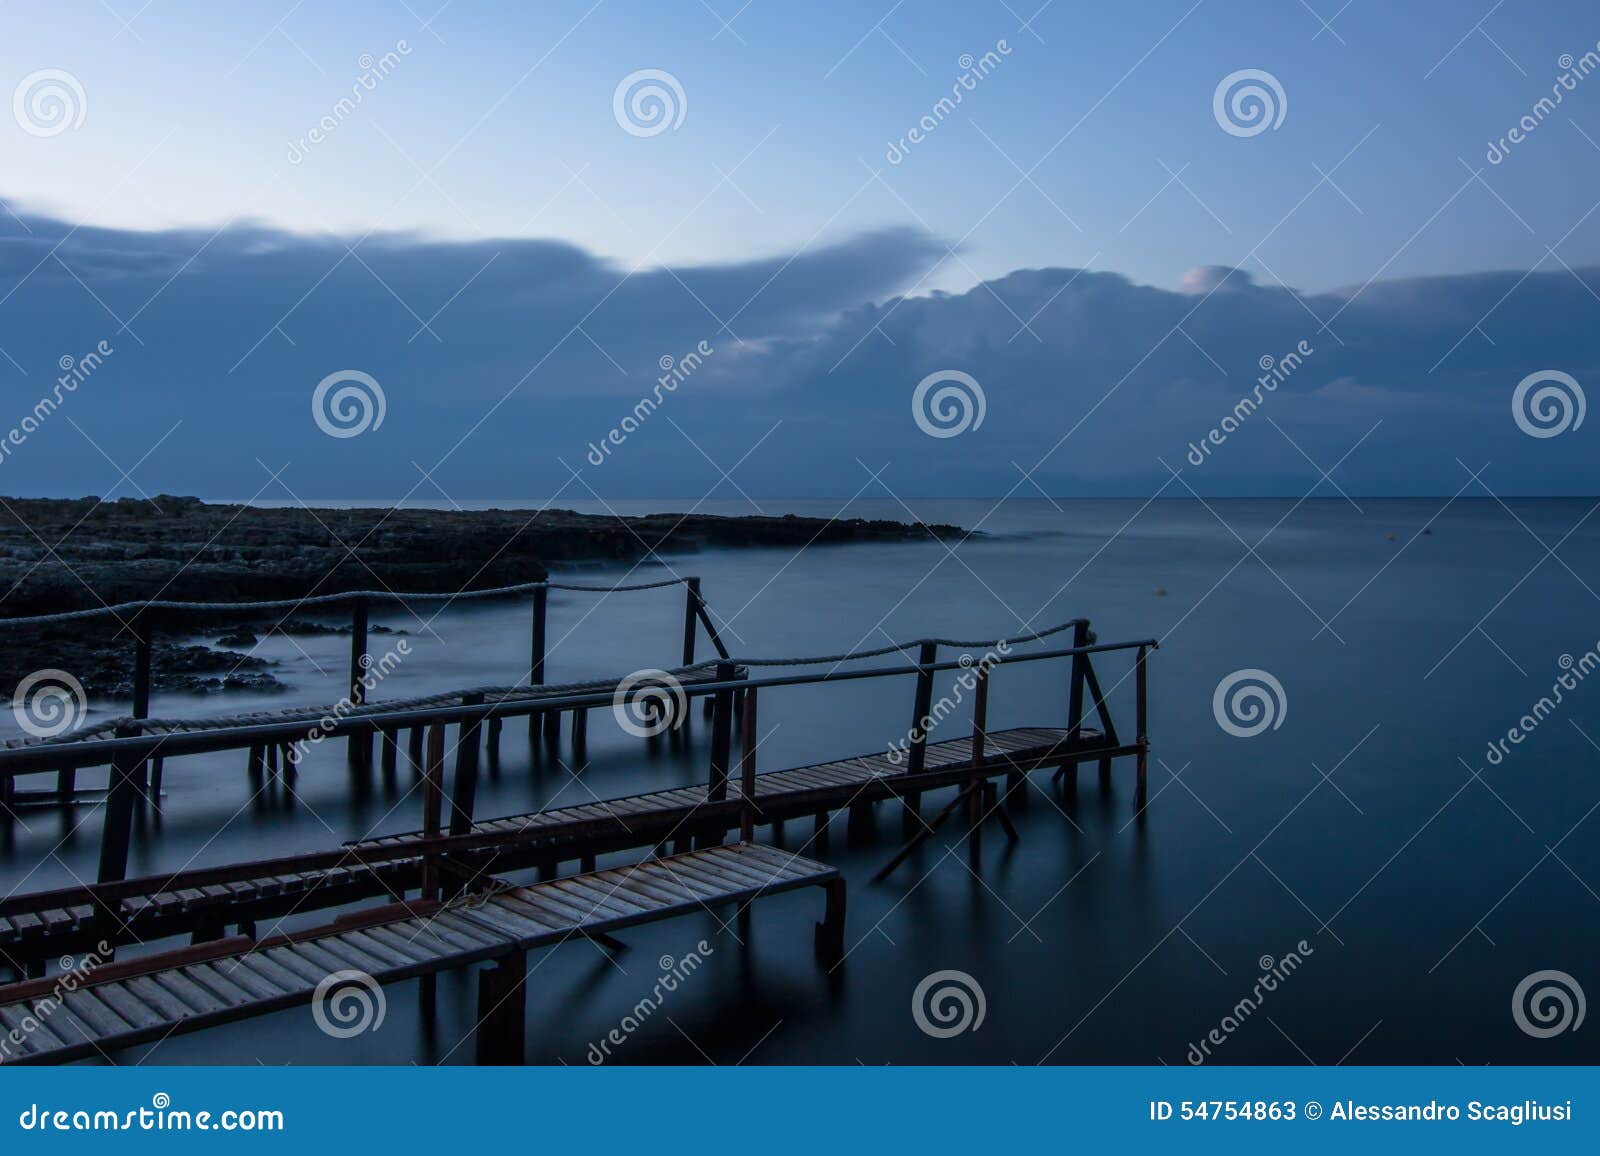 long exposure: a wooden pier after sunset in a blu autumn sky